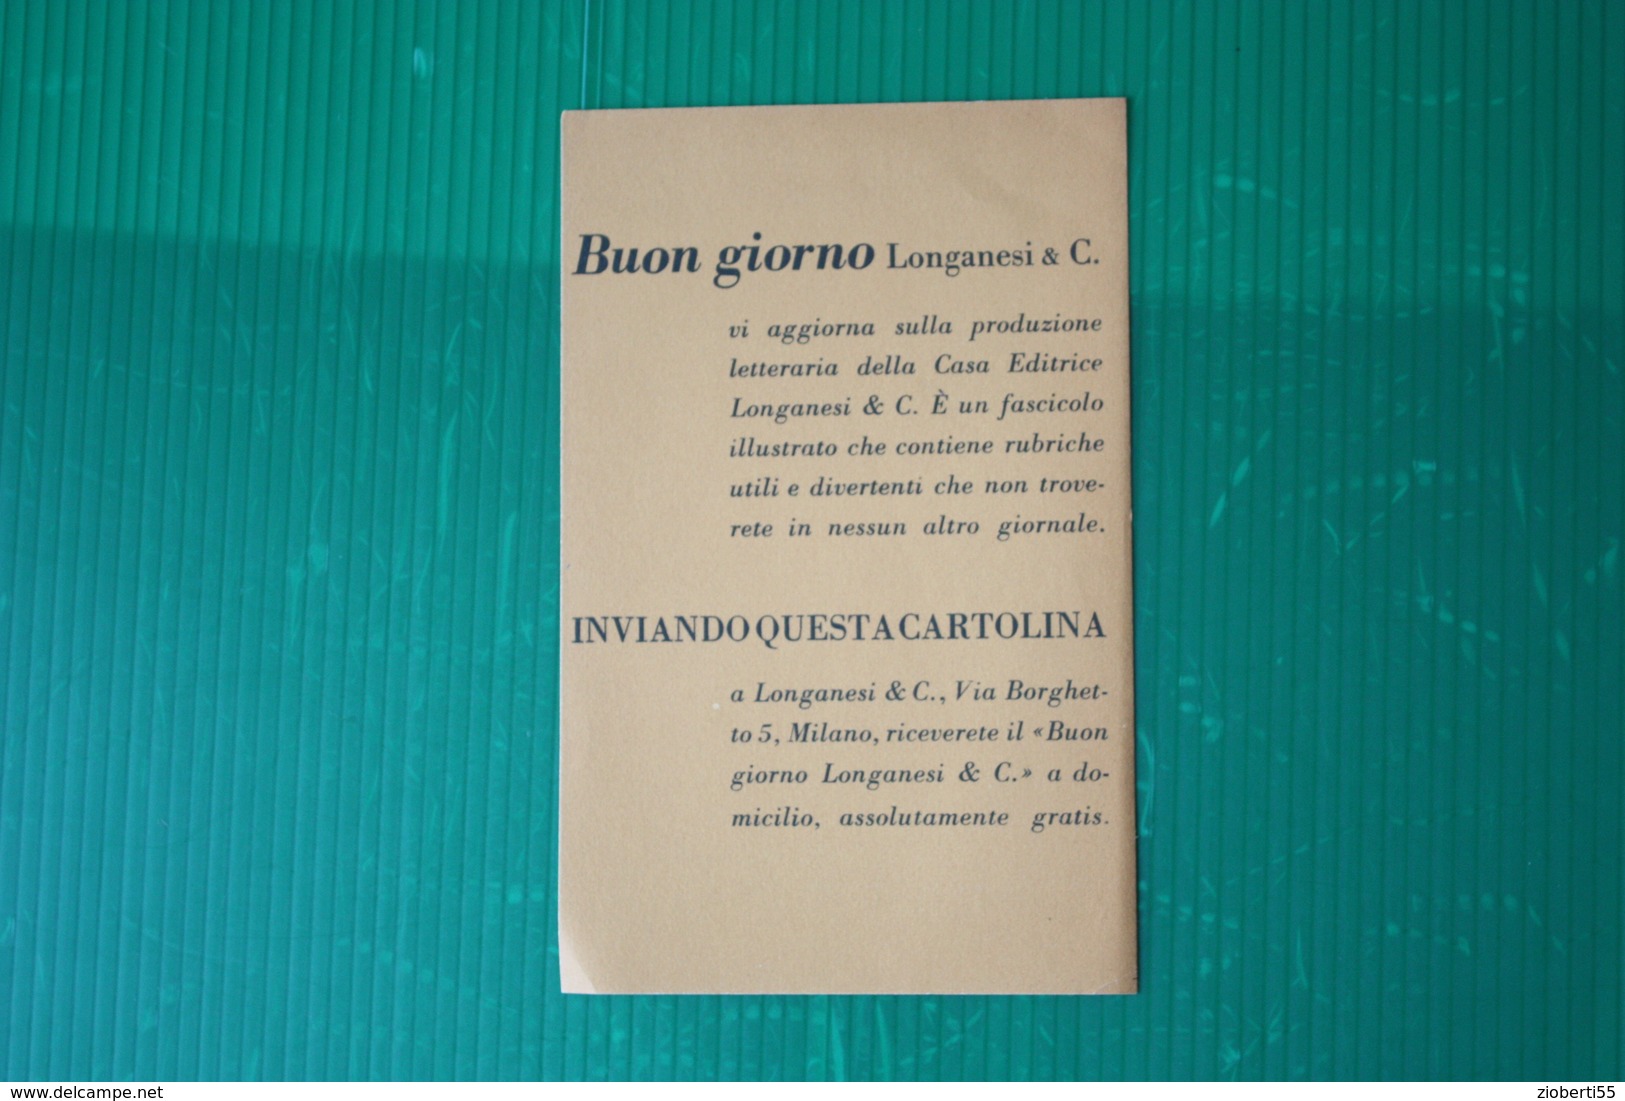 EDITORE LONGANESI - CARTOLINA RICHIESTA CATALOGO  - ANNI 50 - Autres Accessoires